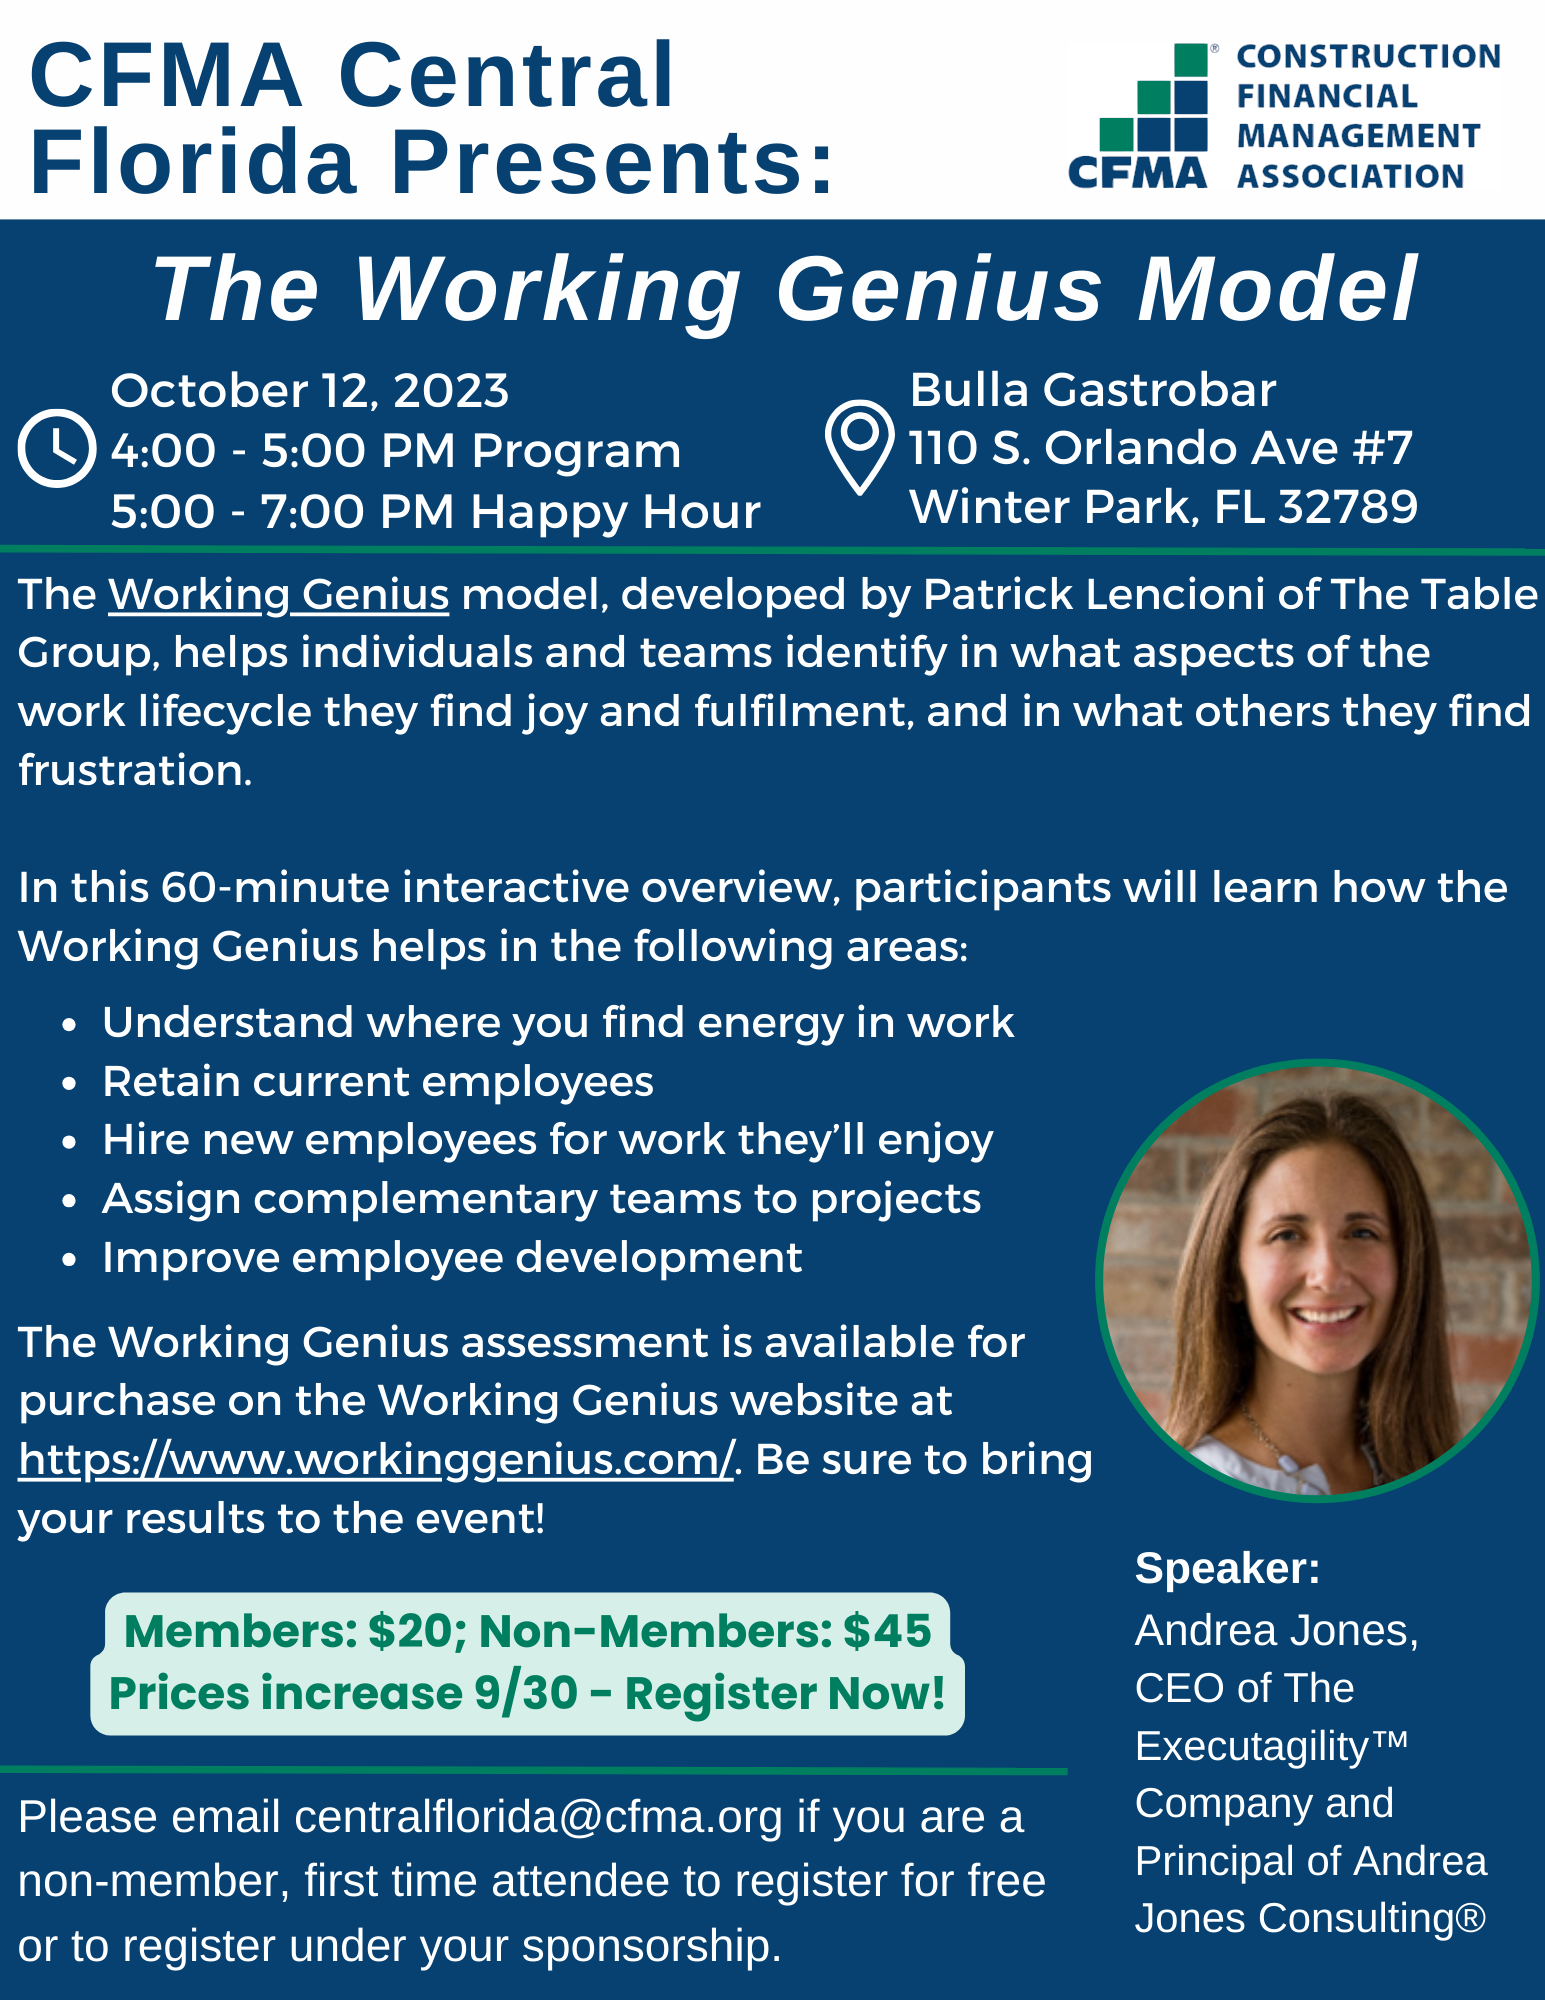 The Working Genius Model Construction Financial Management Association